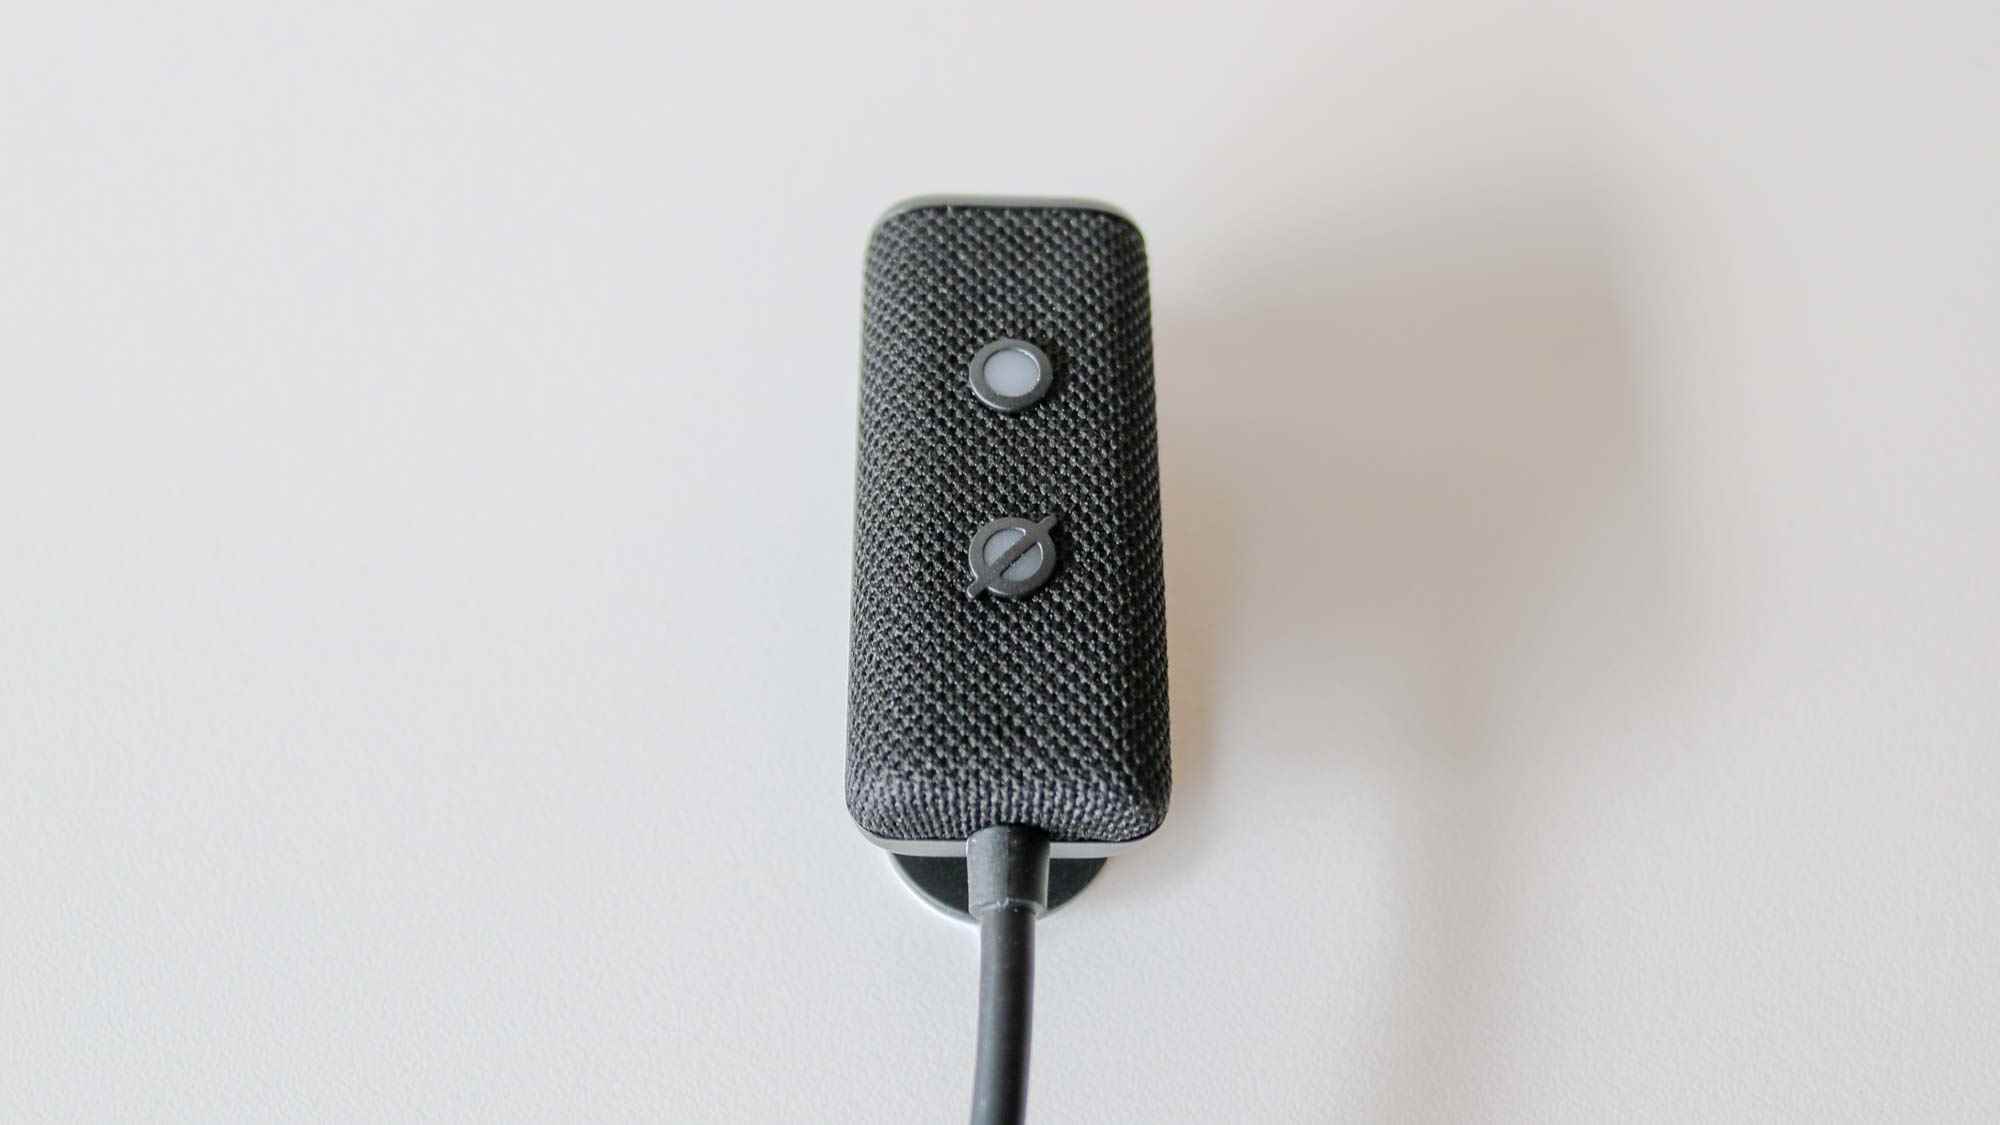 Echo Auto (2. Nesil) mikrofonunun bir resmi